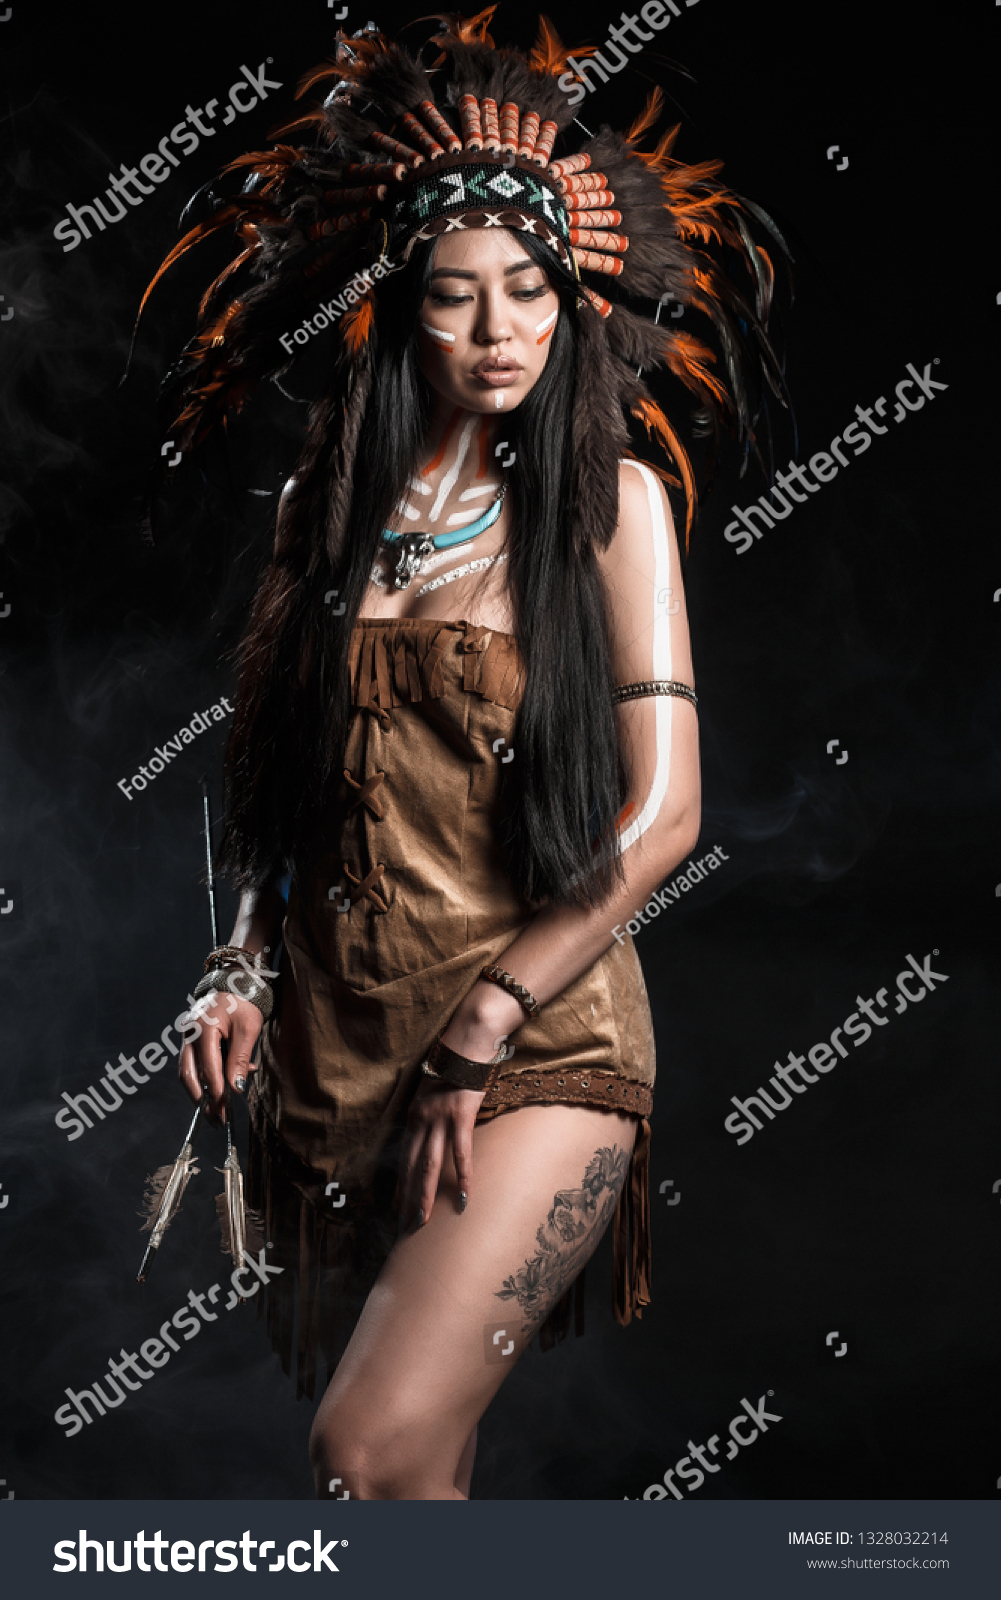 native american indian hot